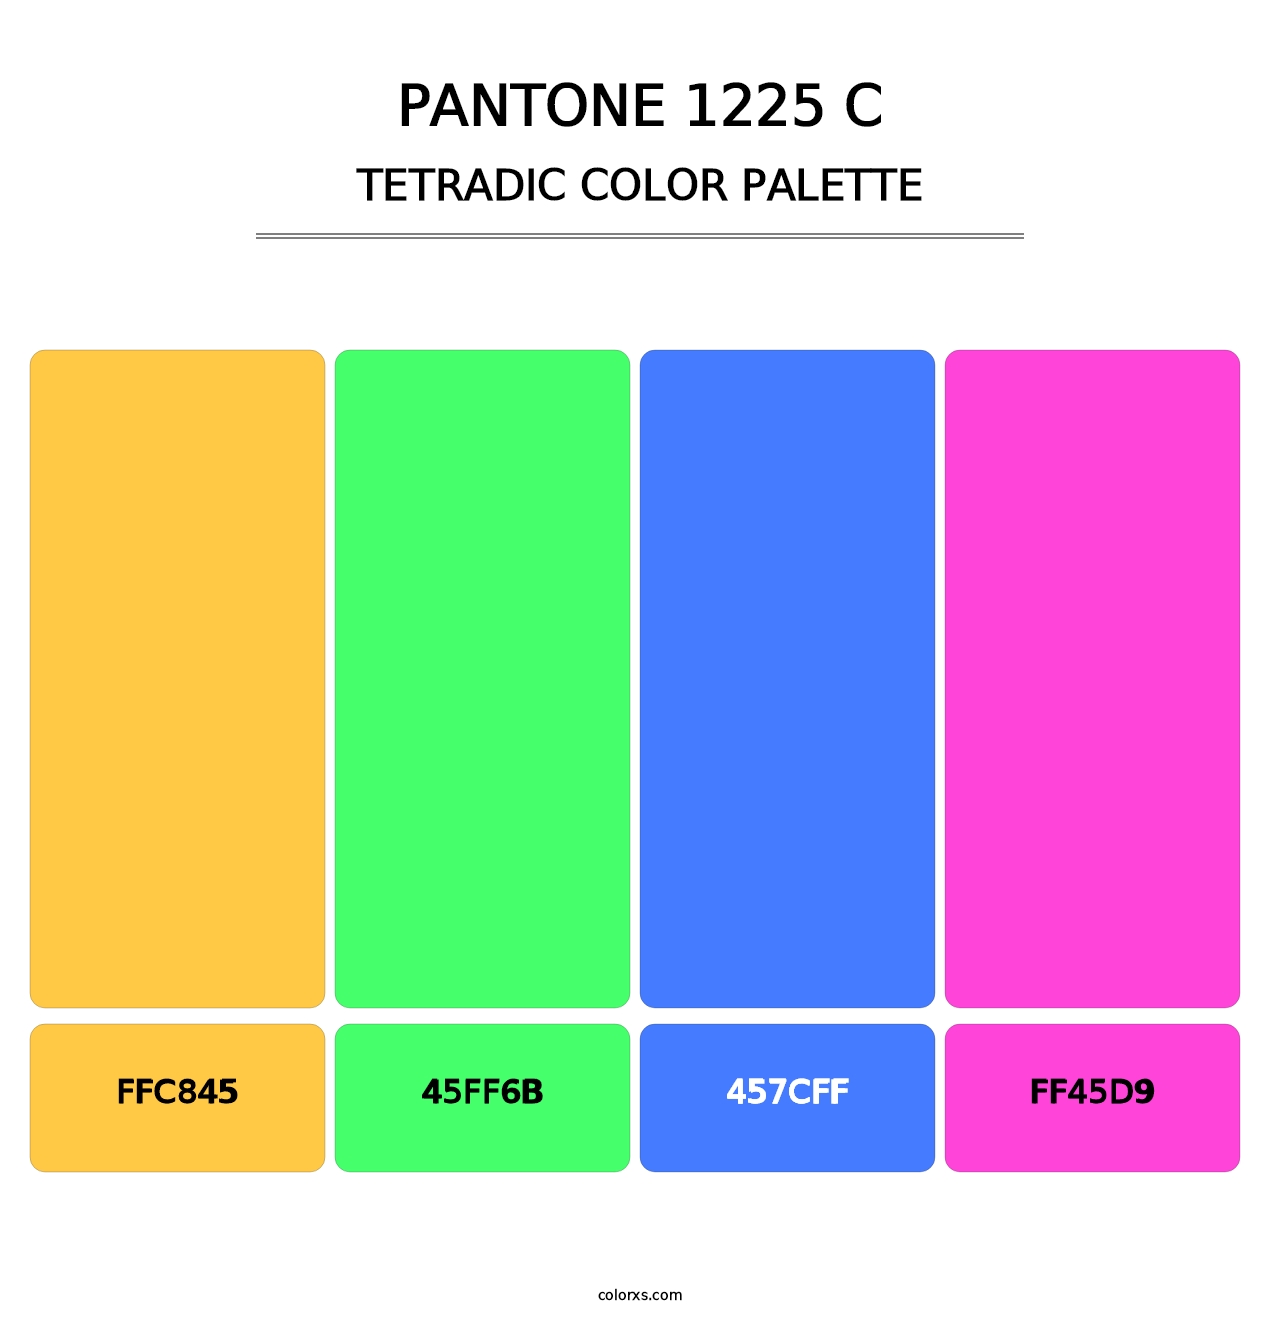 PANTONE 1225 C - Tetradic Color Palette